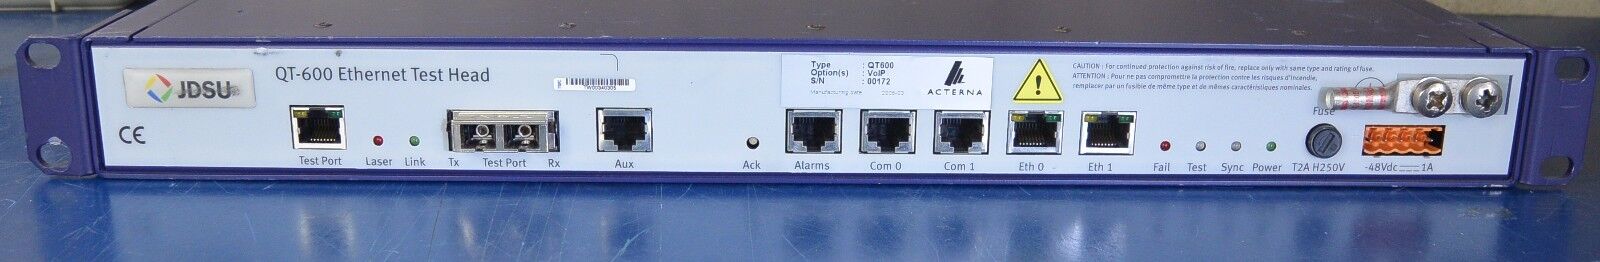 Acterna JDSU QT-600 Ethernet Test Head Probe QT600 with VoIP